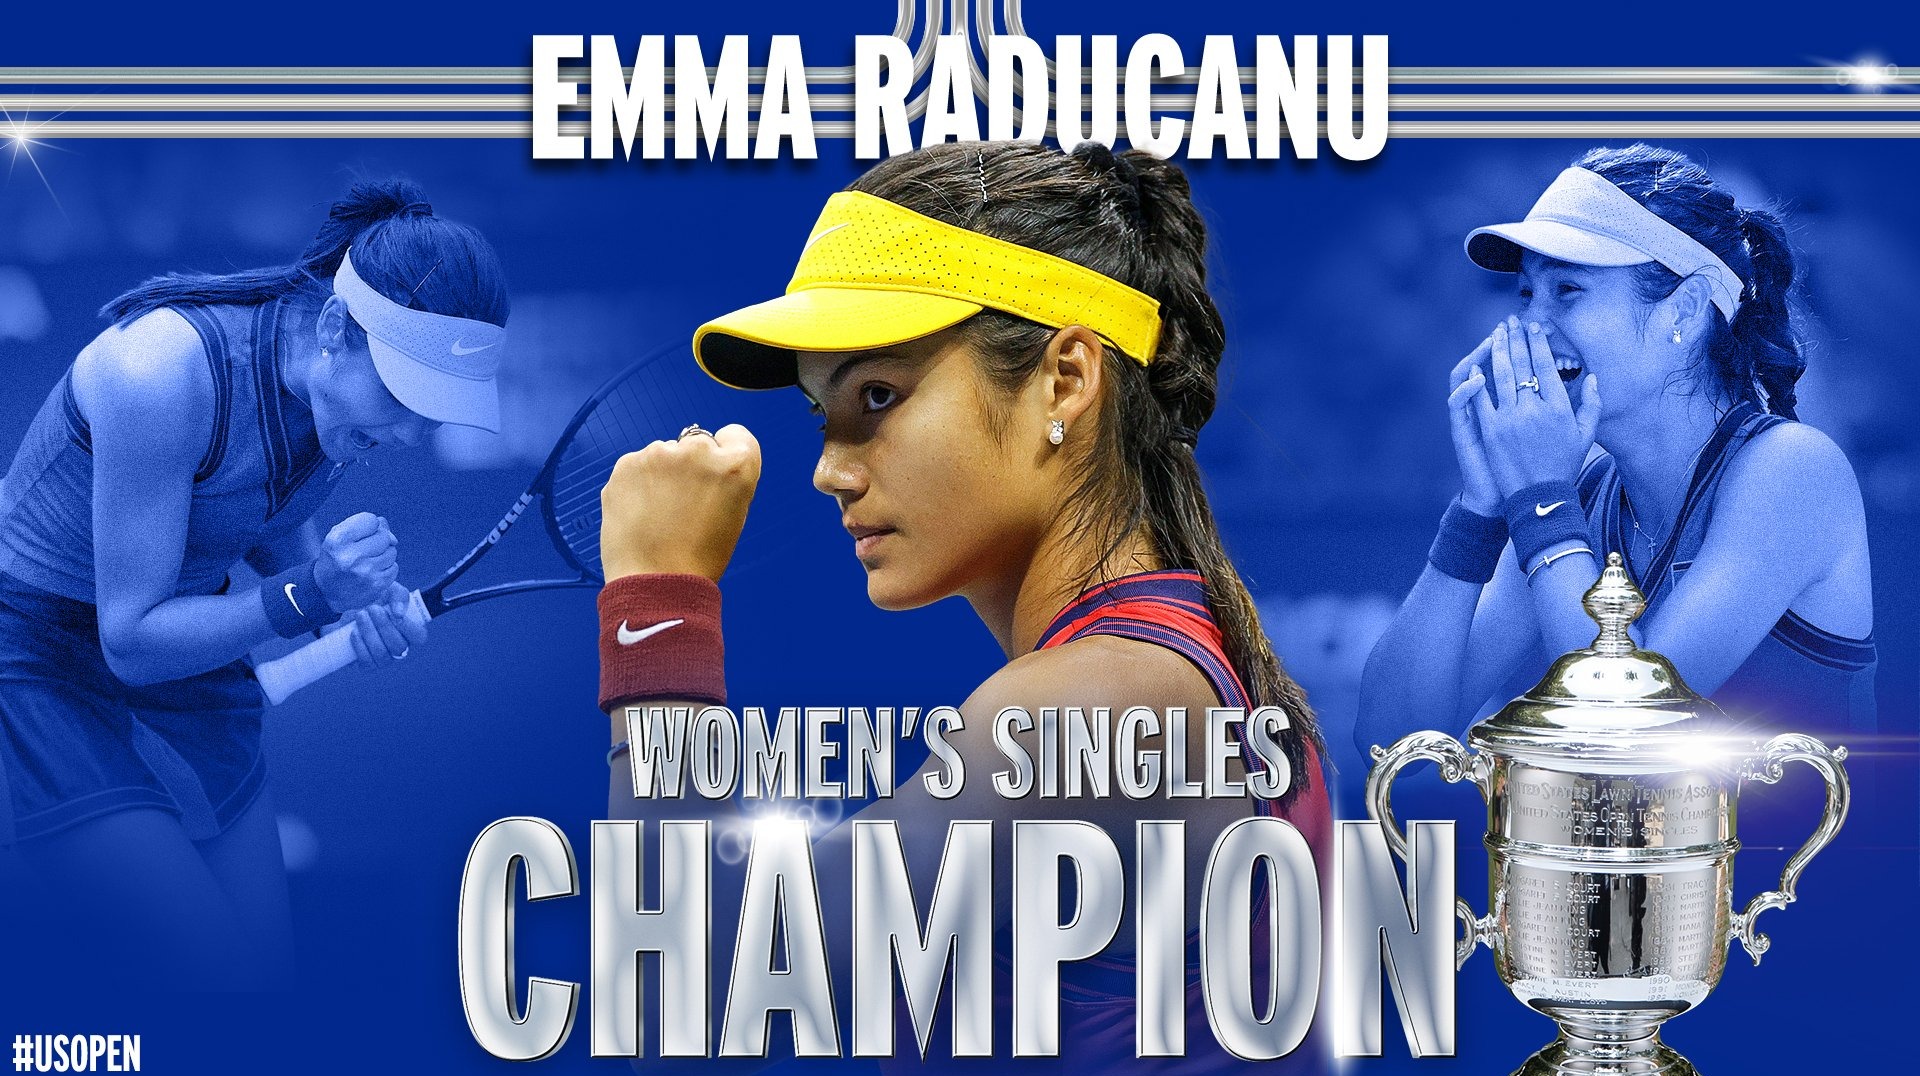 La británica Emman Raducanu se proclamó campeona del US Open.